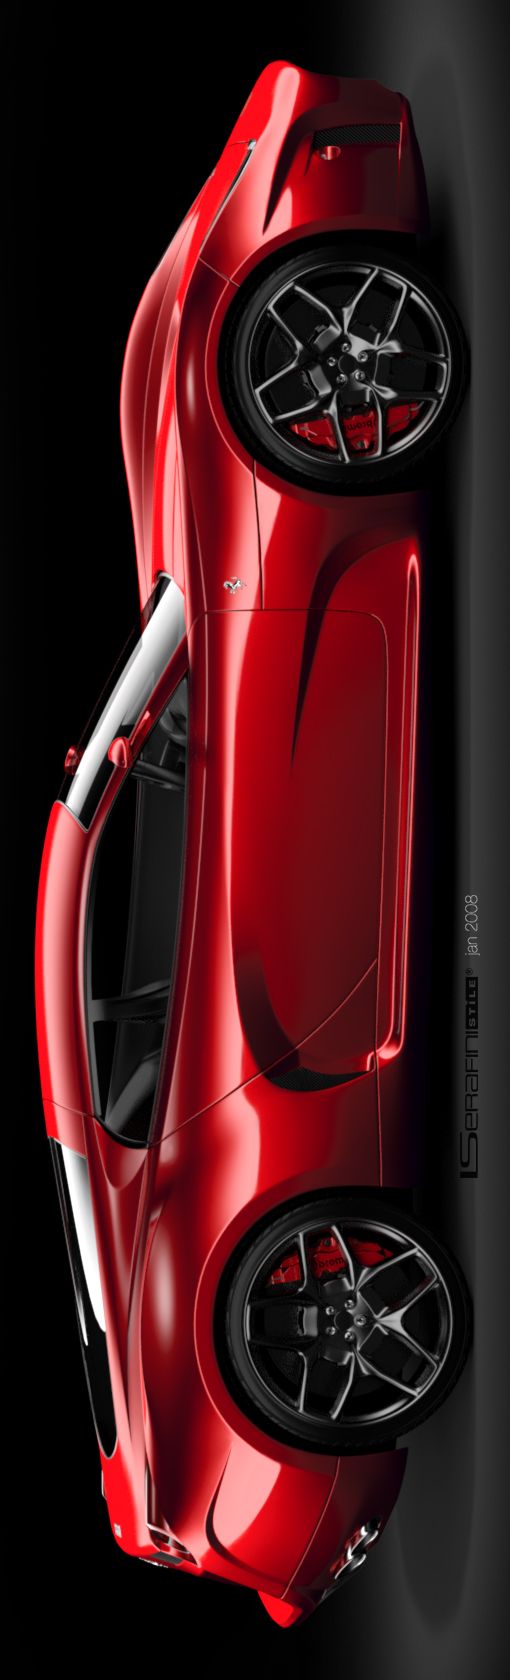 Concept automobile - Ferrari concept 2008_new renders